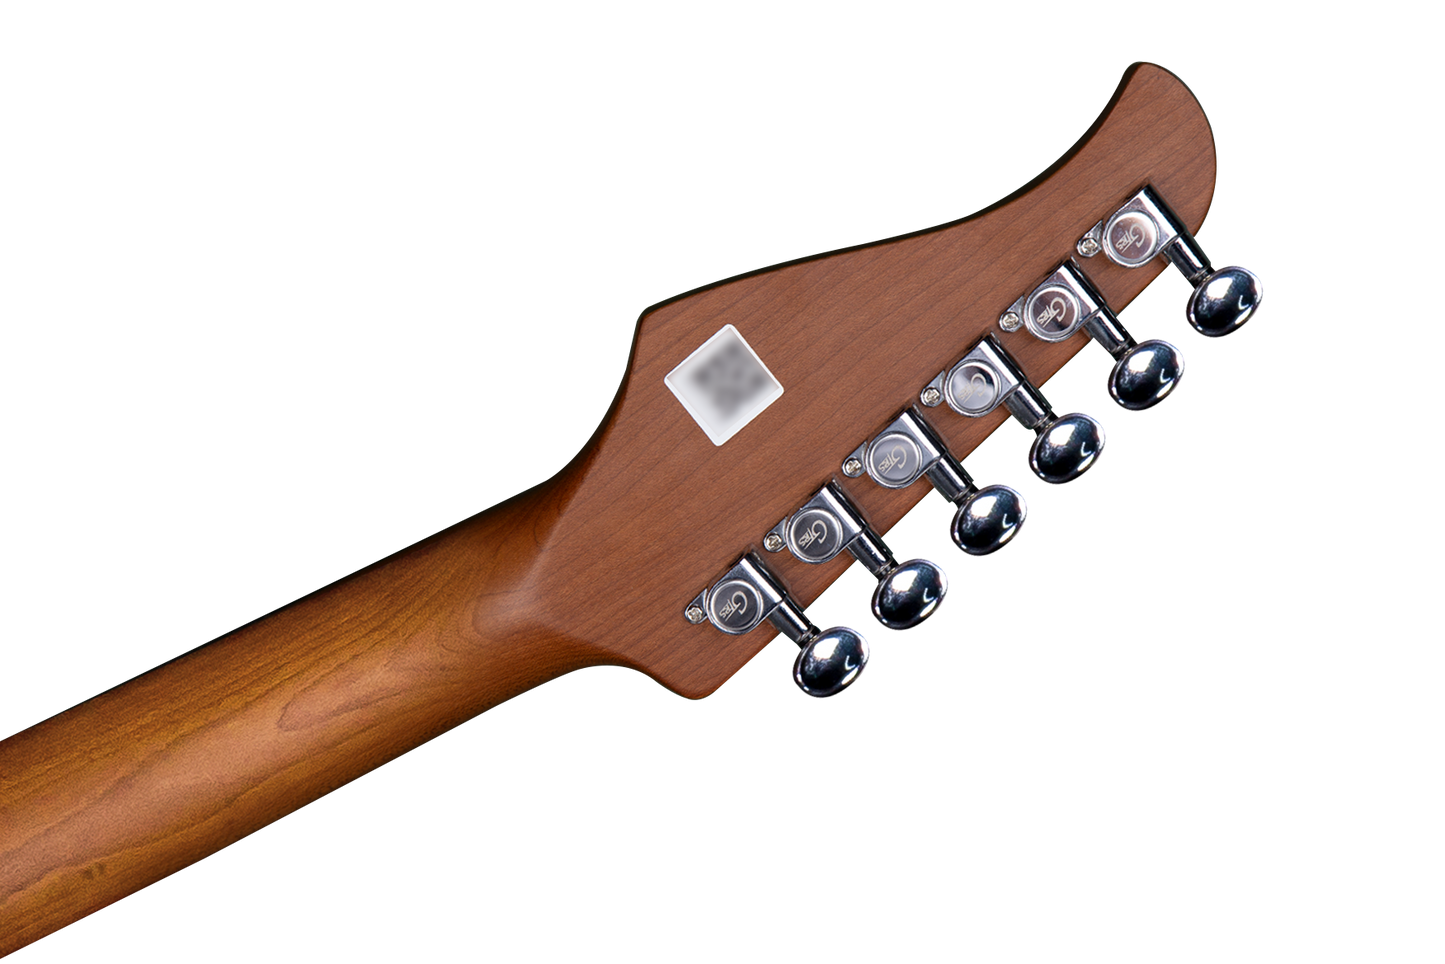 Mooer GTRS S800 Intelligent Guitar (Metal Red)